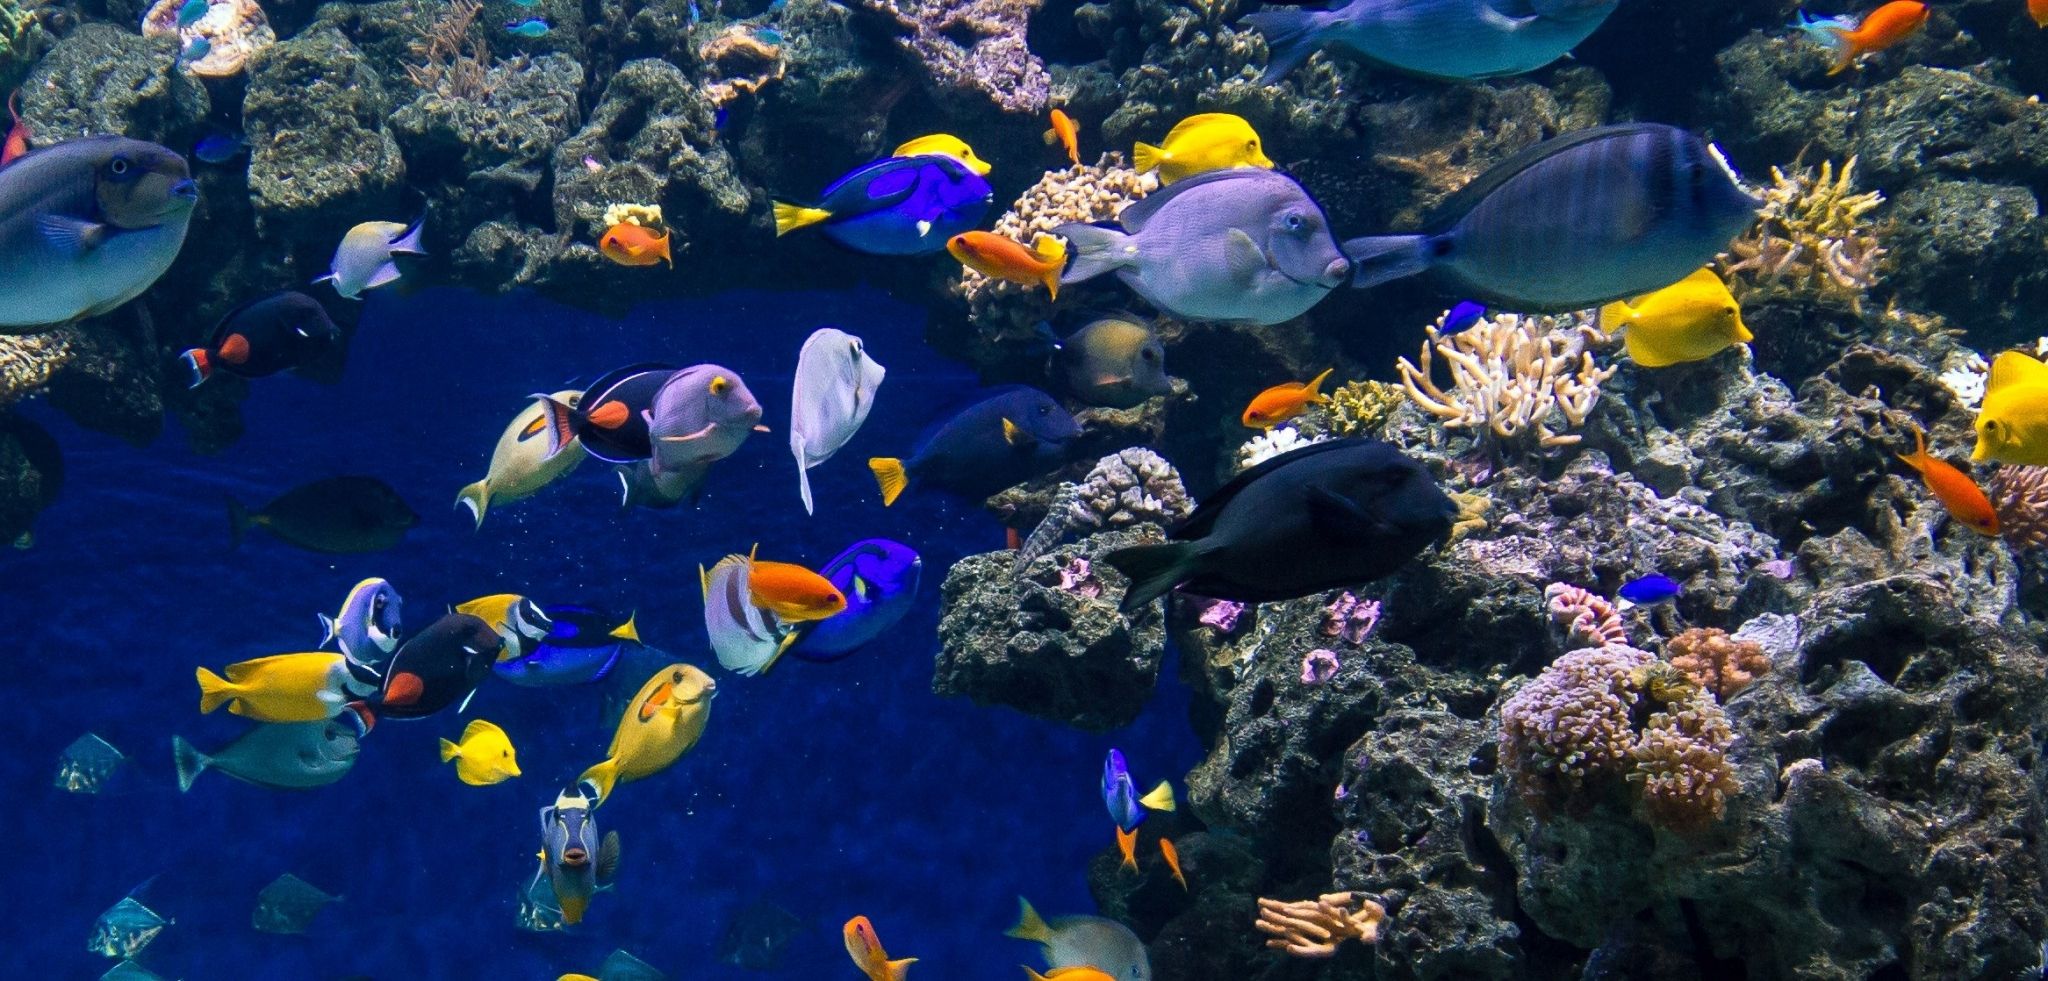 Aquarium Backgrounds For Computer